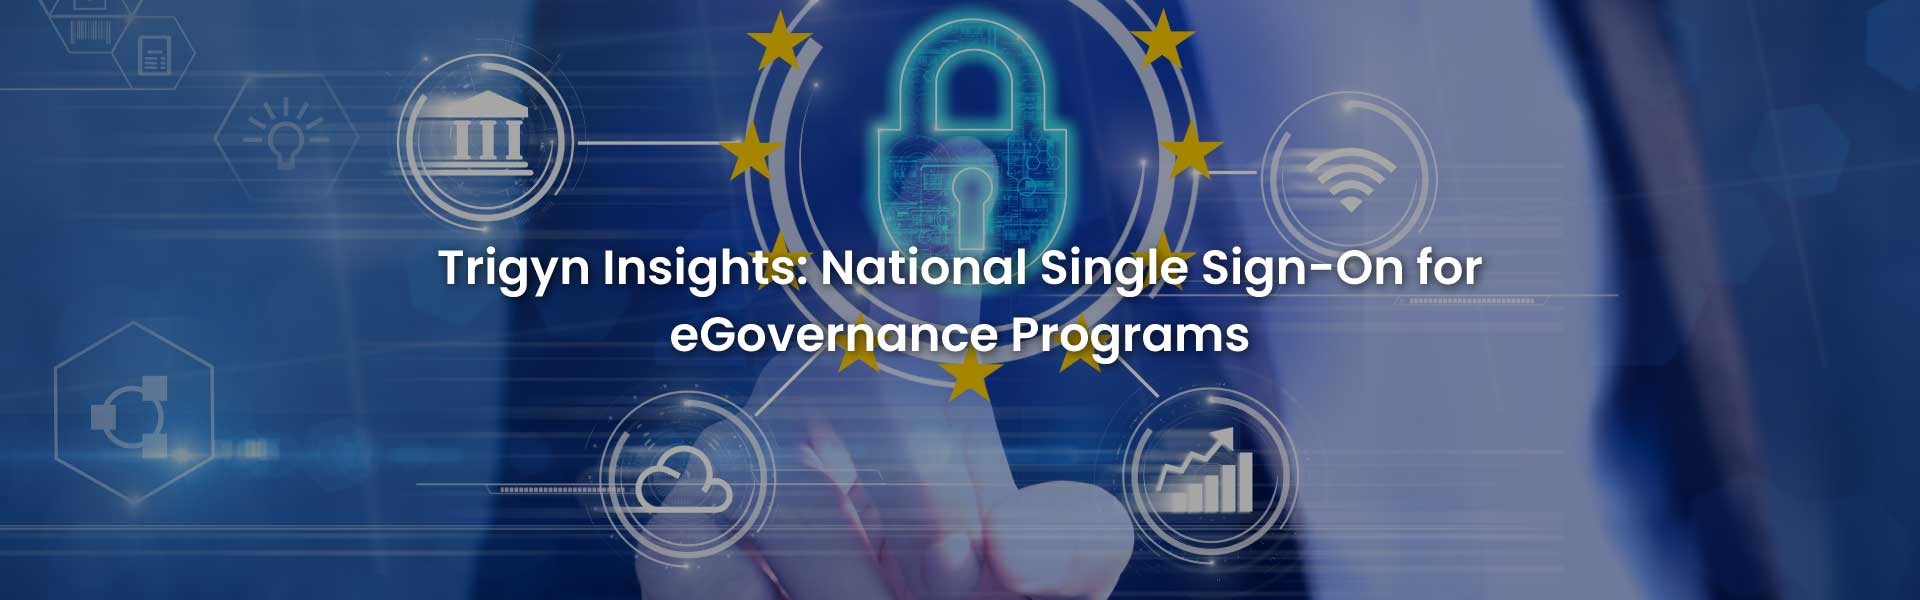 National Single Sign-On for eGovernance